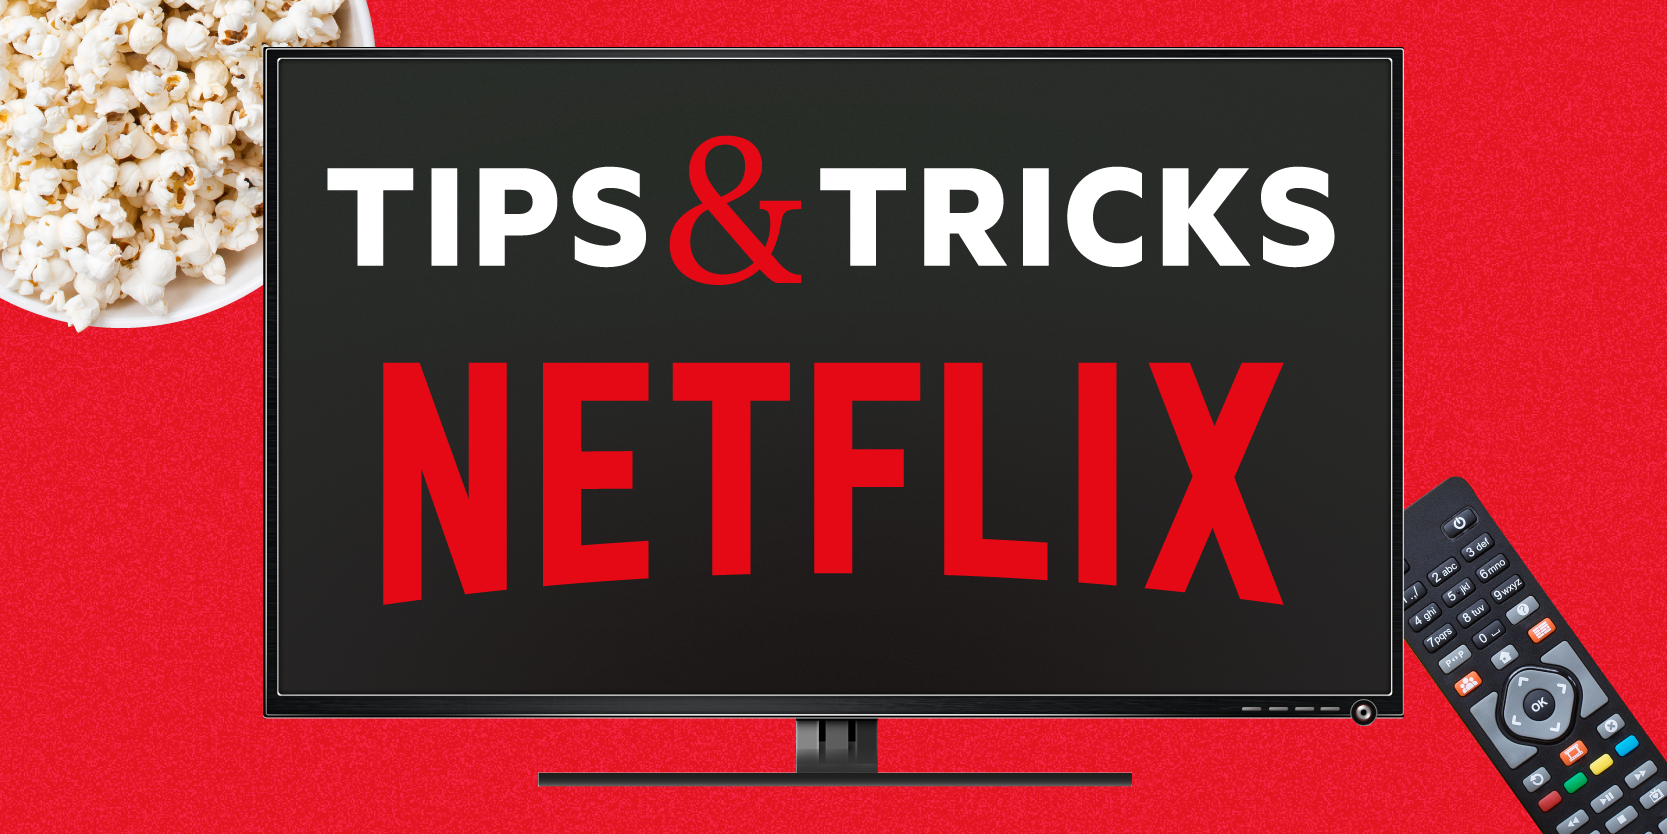 Netflix tips & tricks 2x1